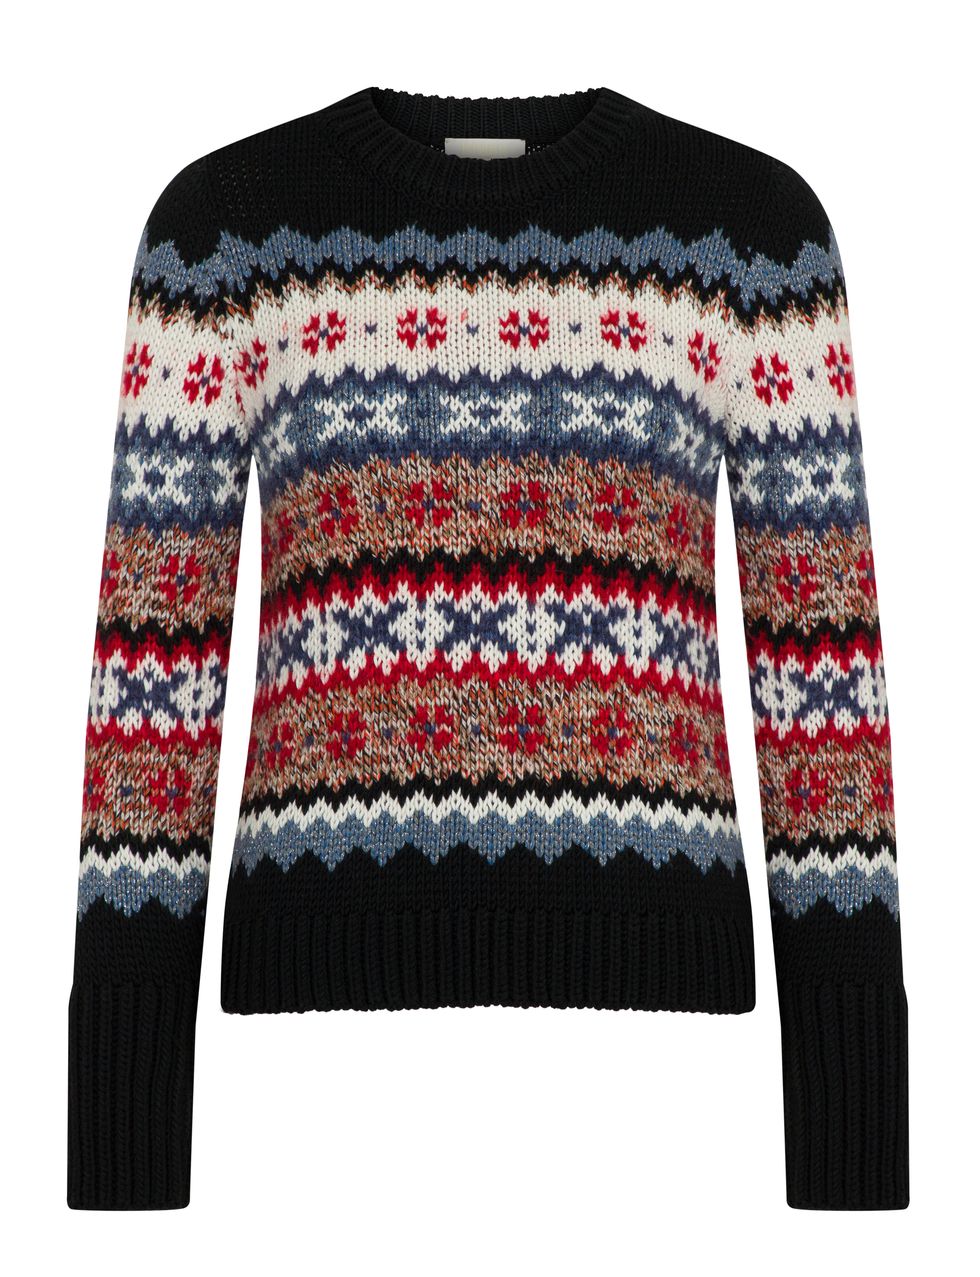 knitss maglione stile norvegese tendenza moda inverno 20202021